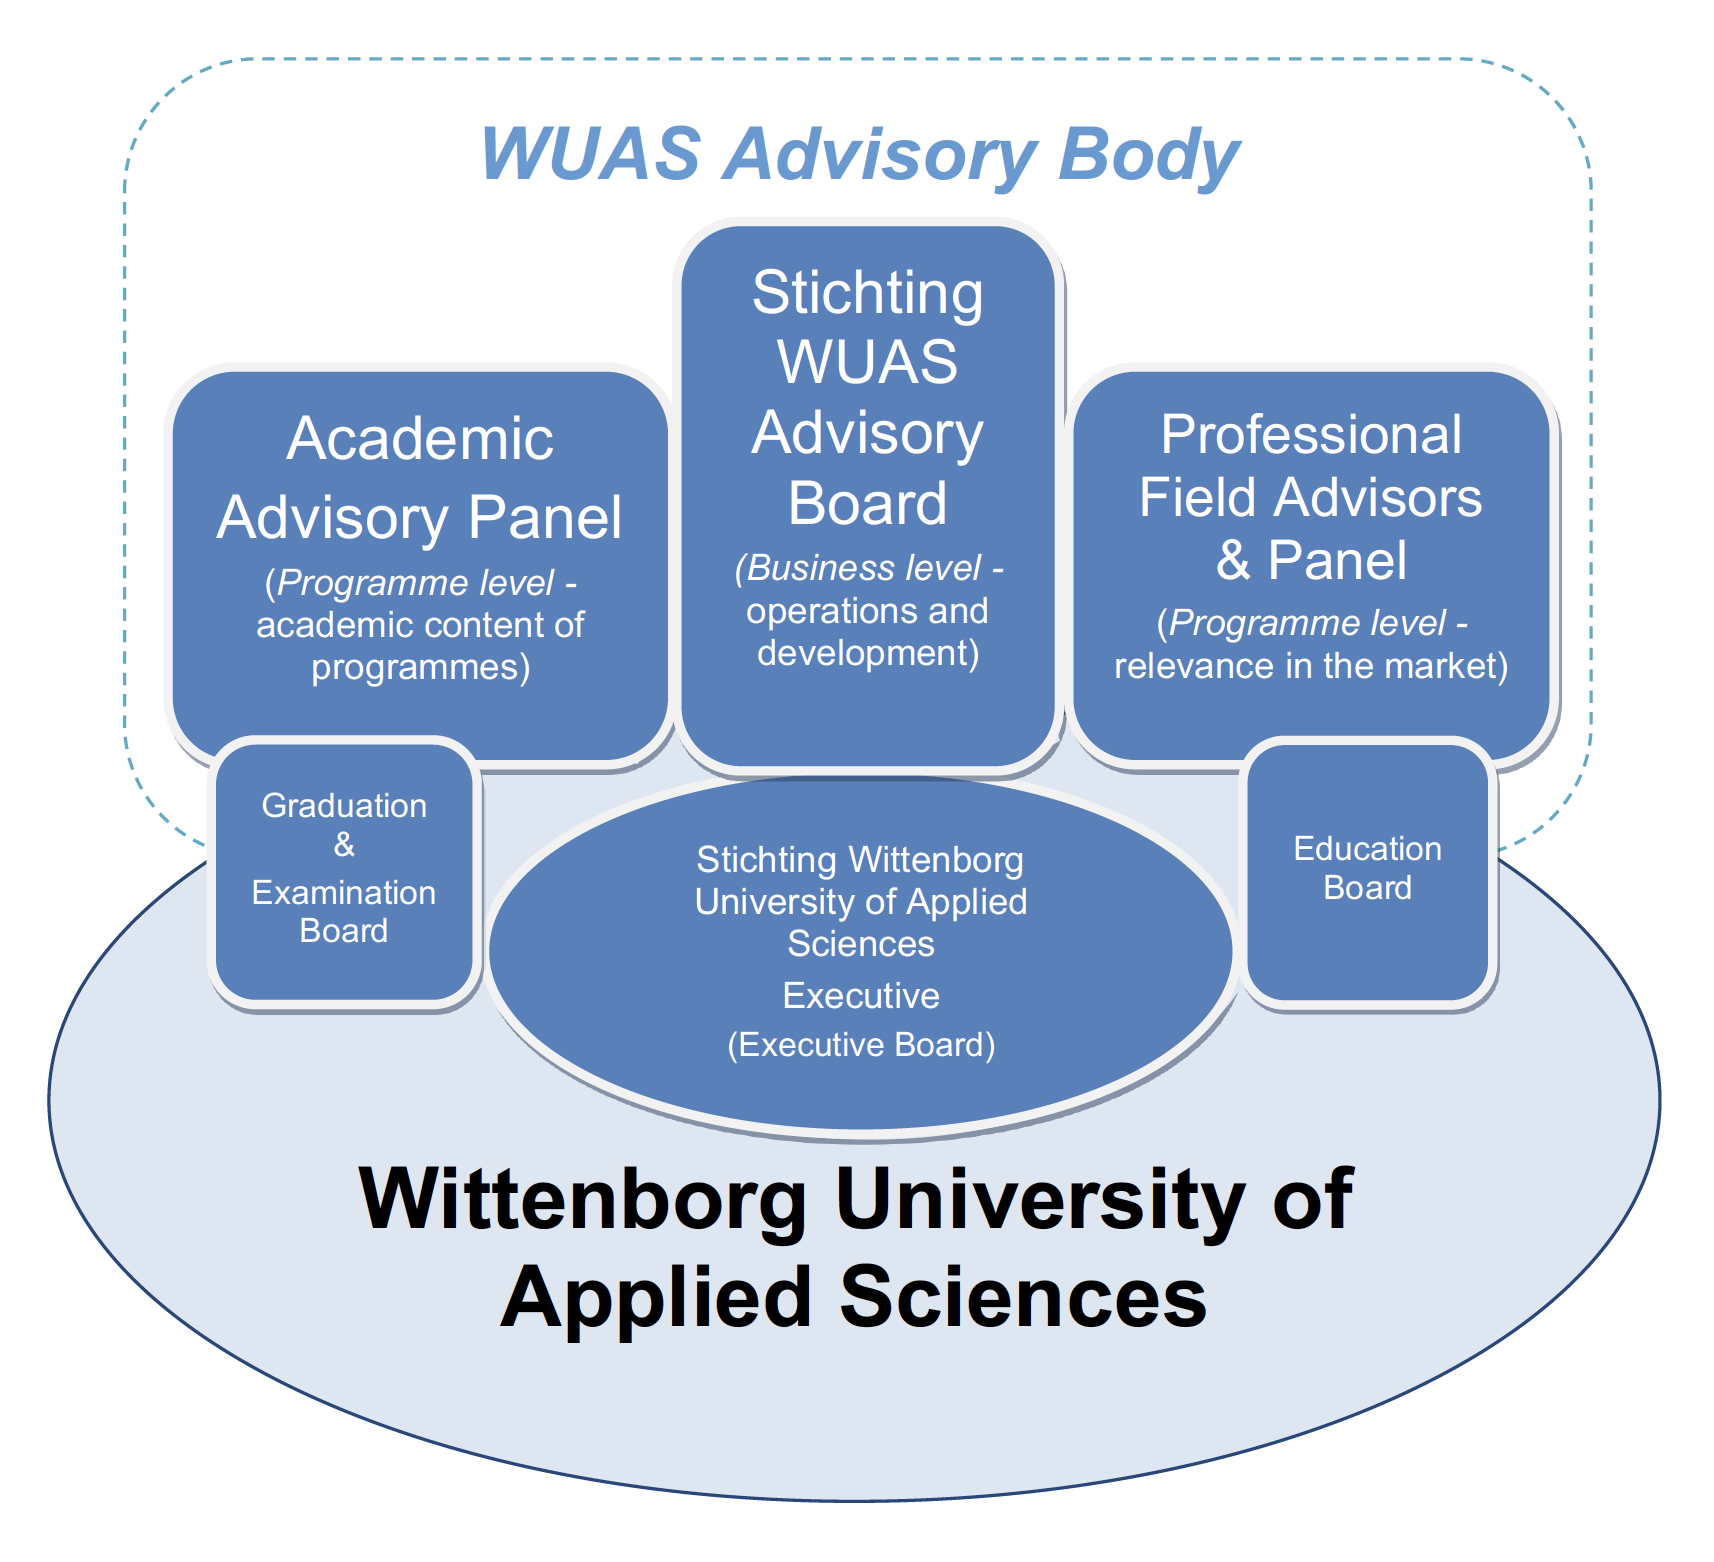 WUAS Advisory Body